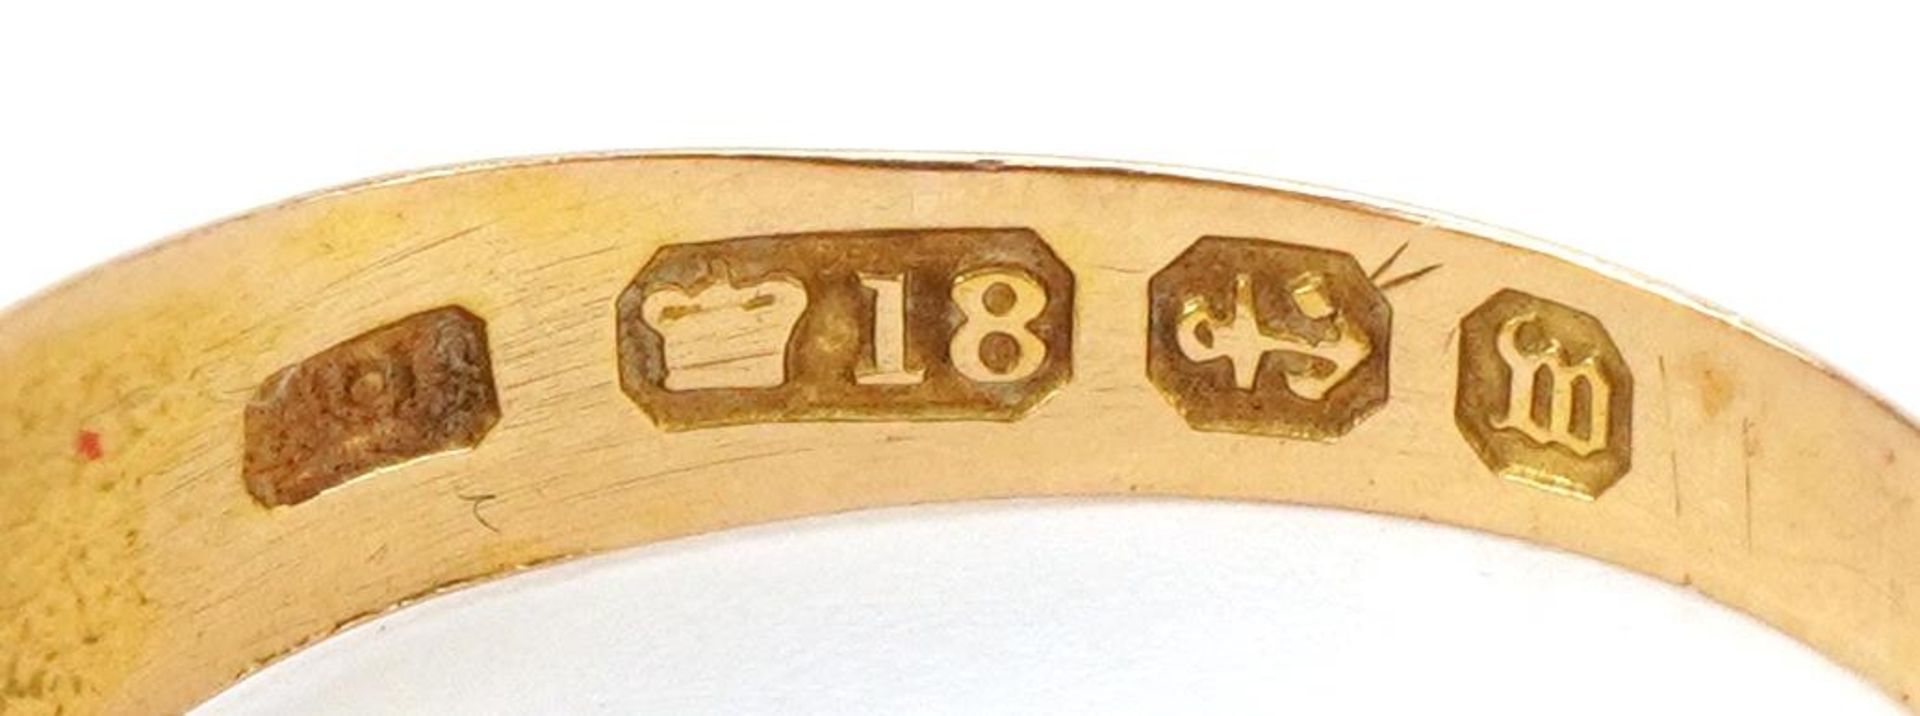 Victorian 18ct gold diamond Gypsy ring, Birmingham 1896, size M, 1.7g - Image 4 of 4